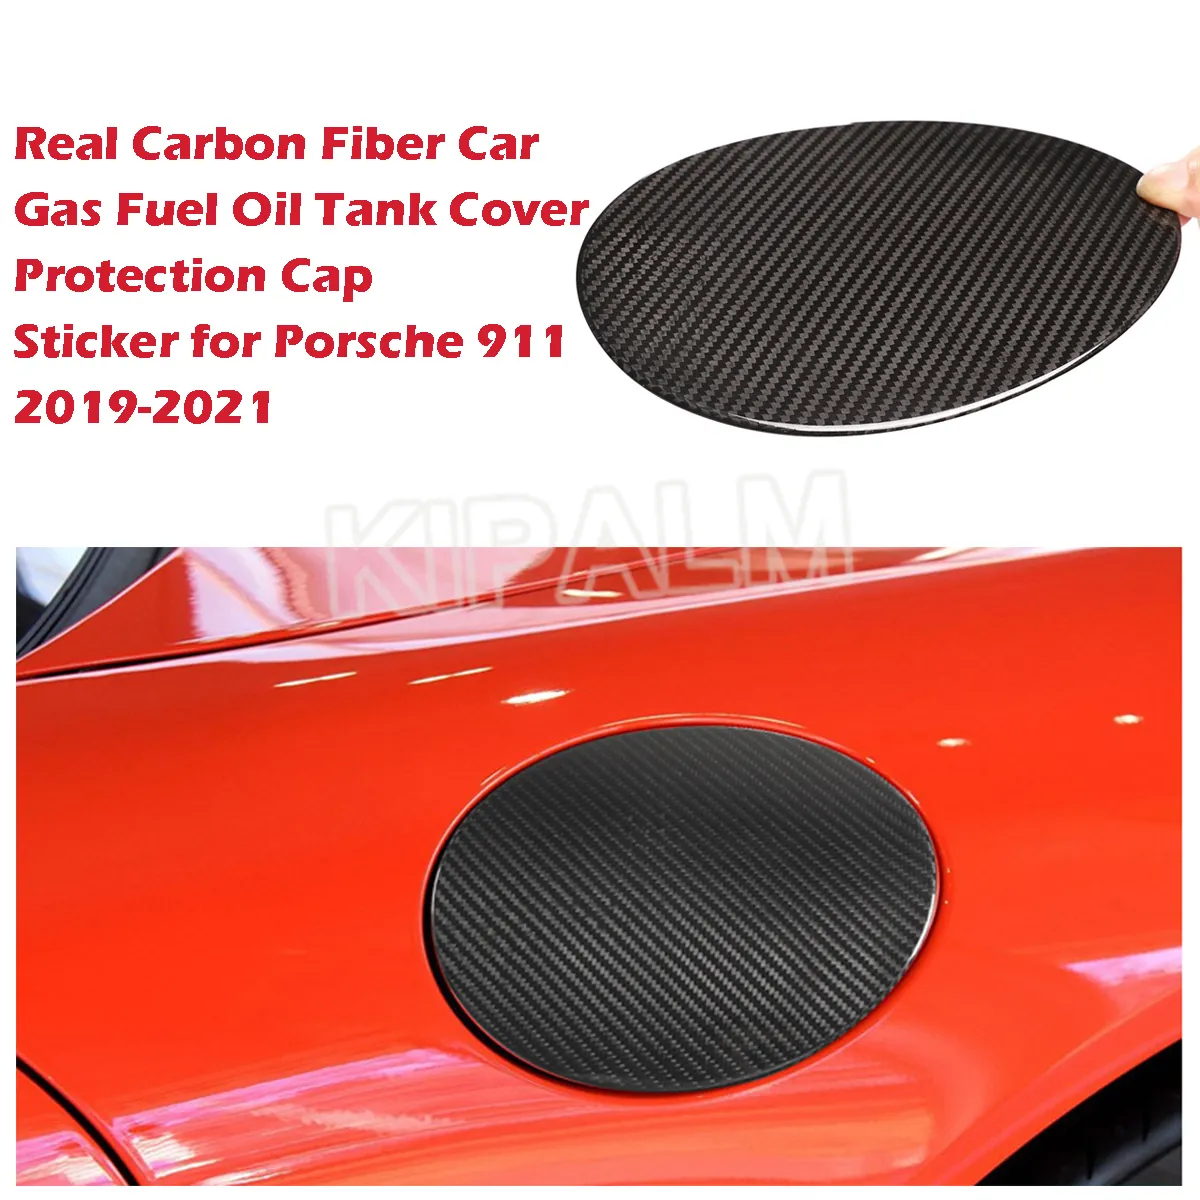 1 piece Car Real Carbon Fiber Sticker Gas Fuel Oil Tank Cover Protection Cap for Porsche 911 2019-2021